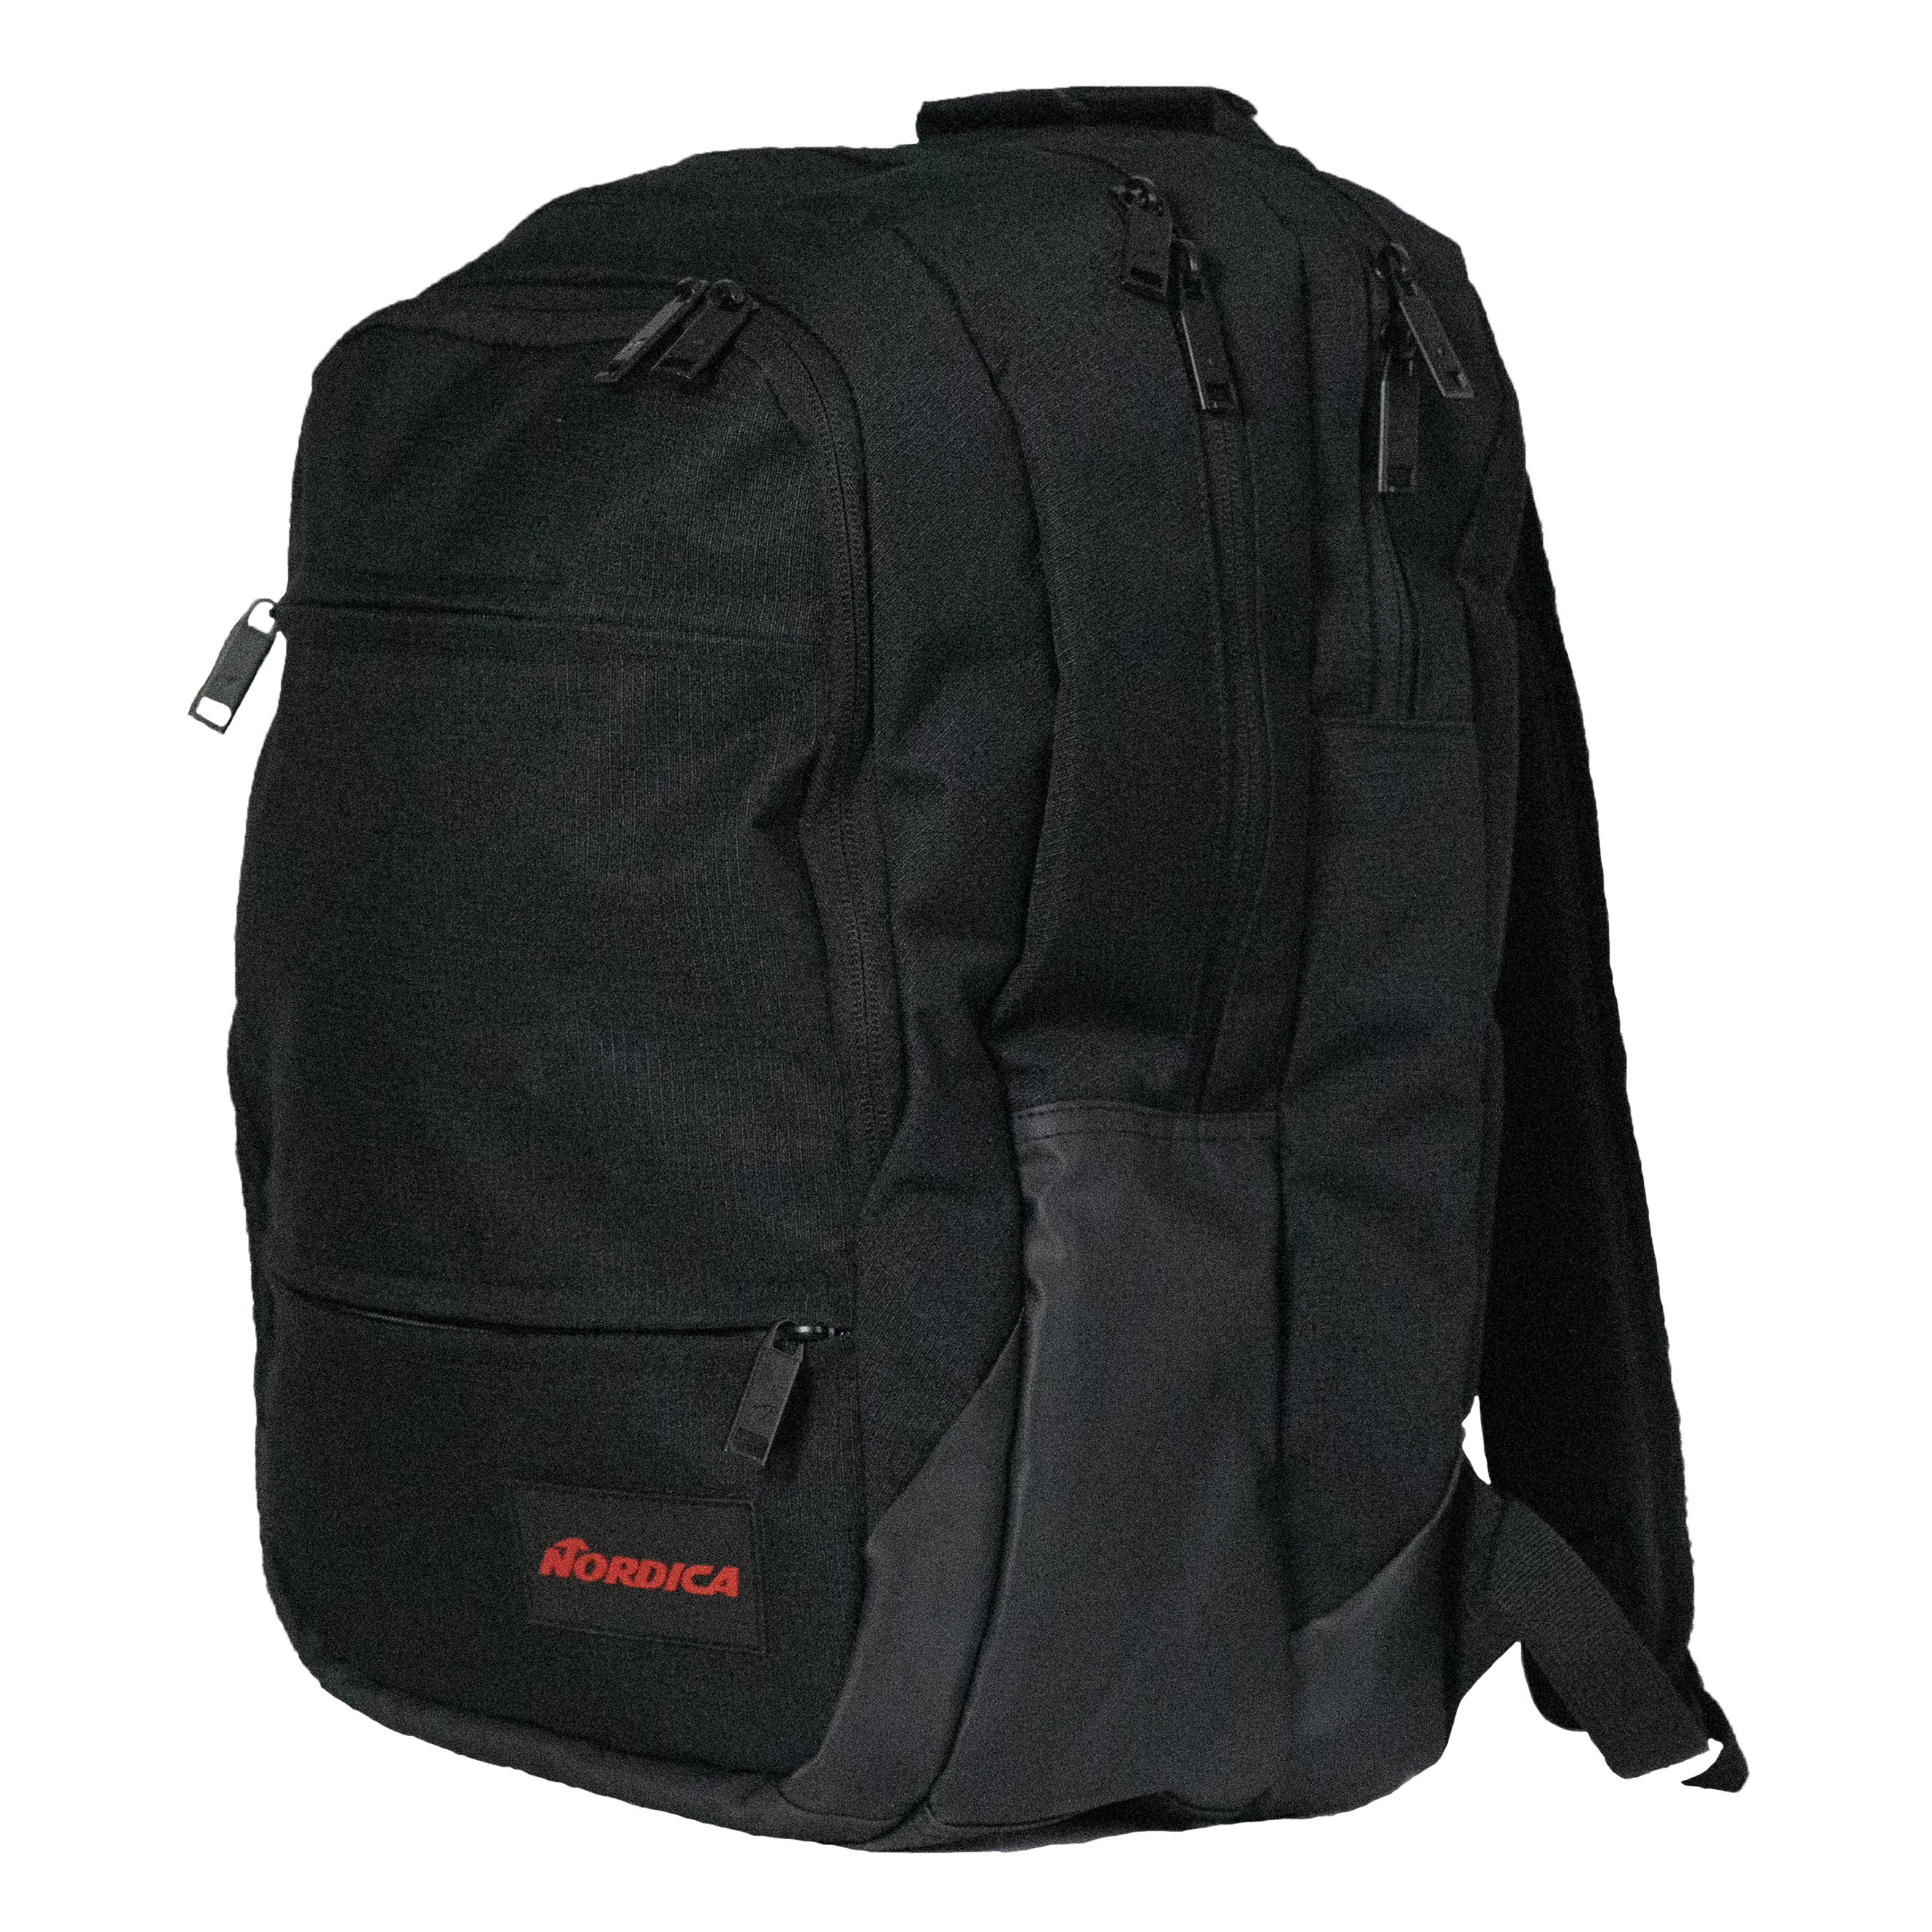 Headquarter Backpack